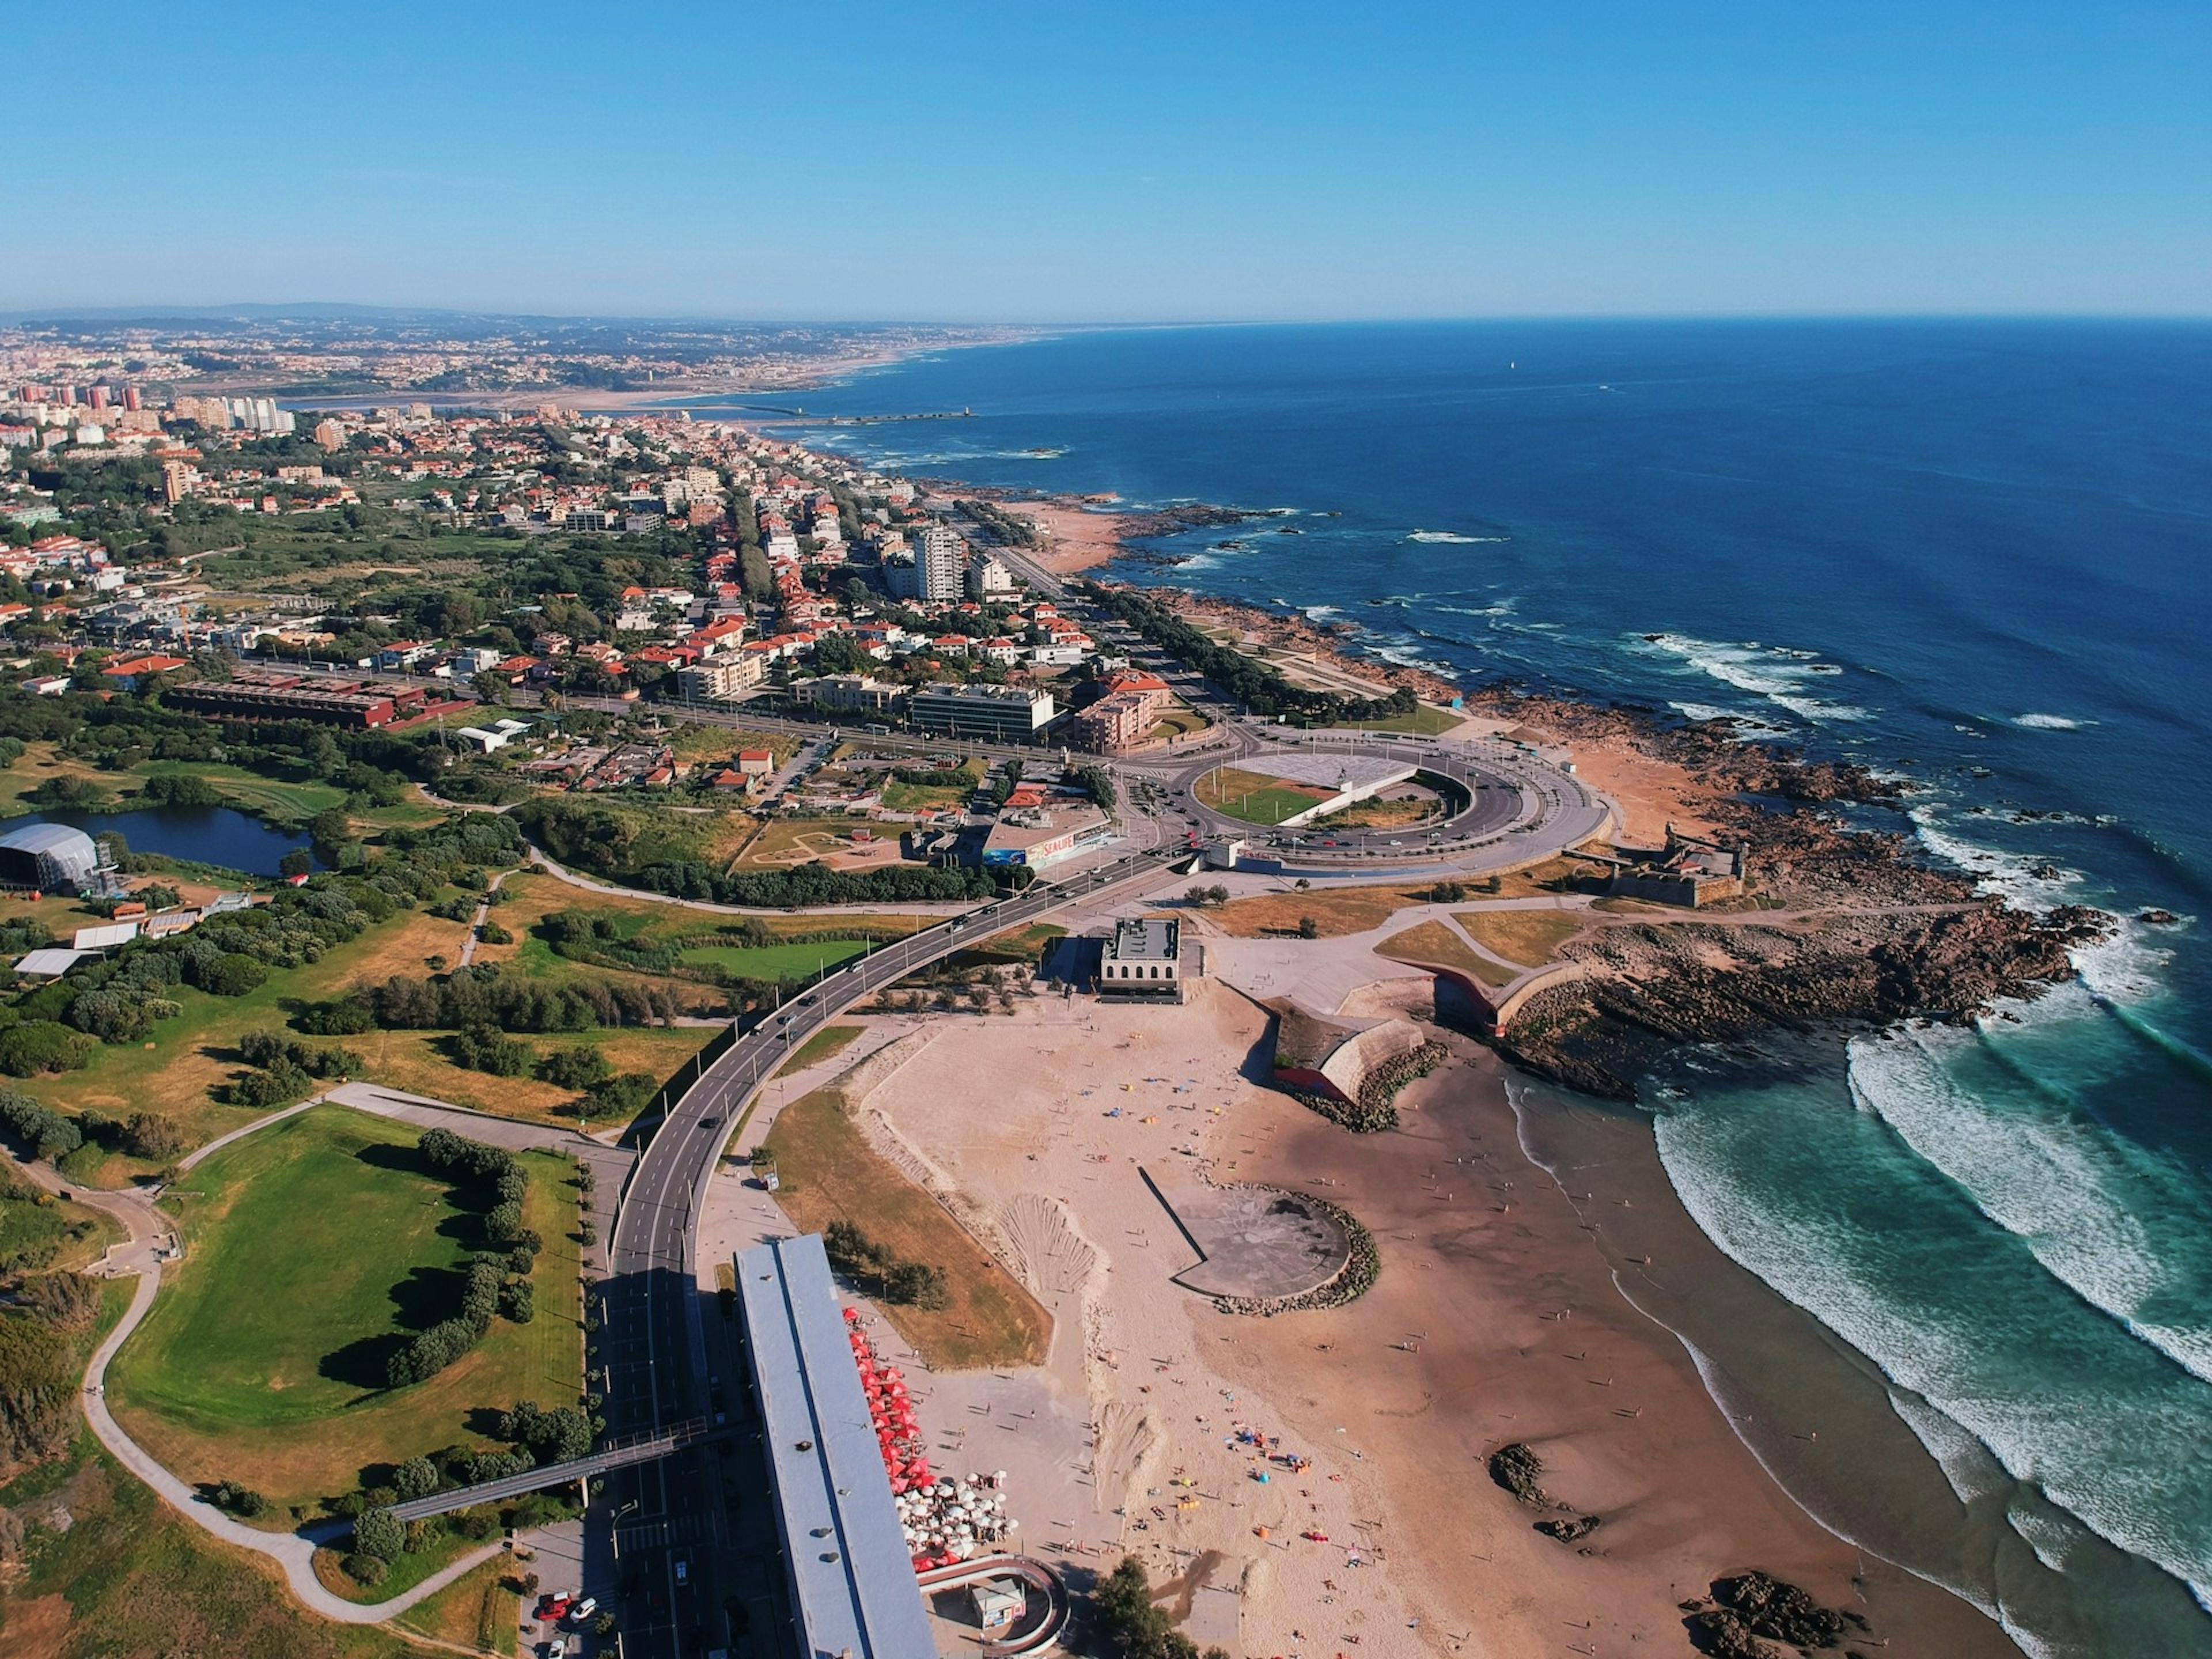 Aerial view of Porto's coastline and city park